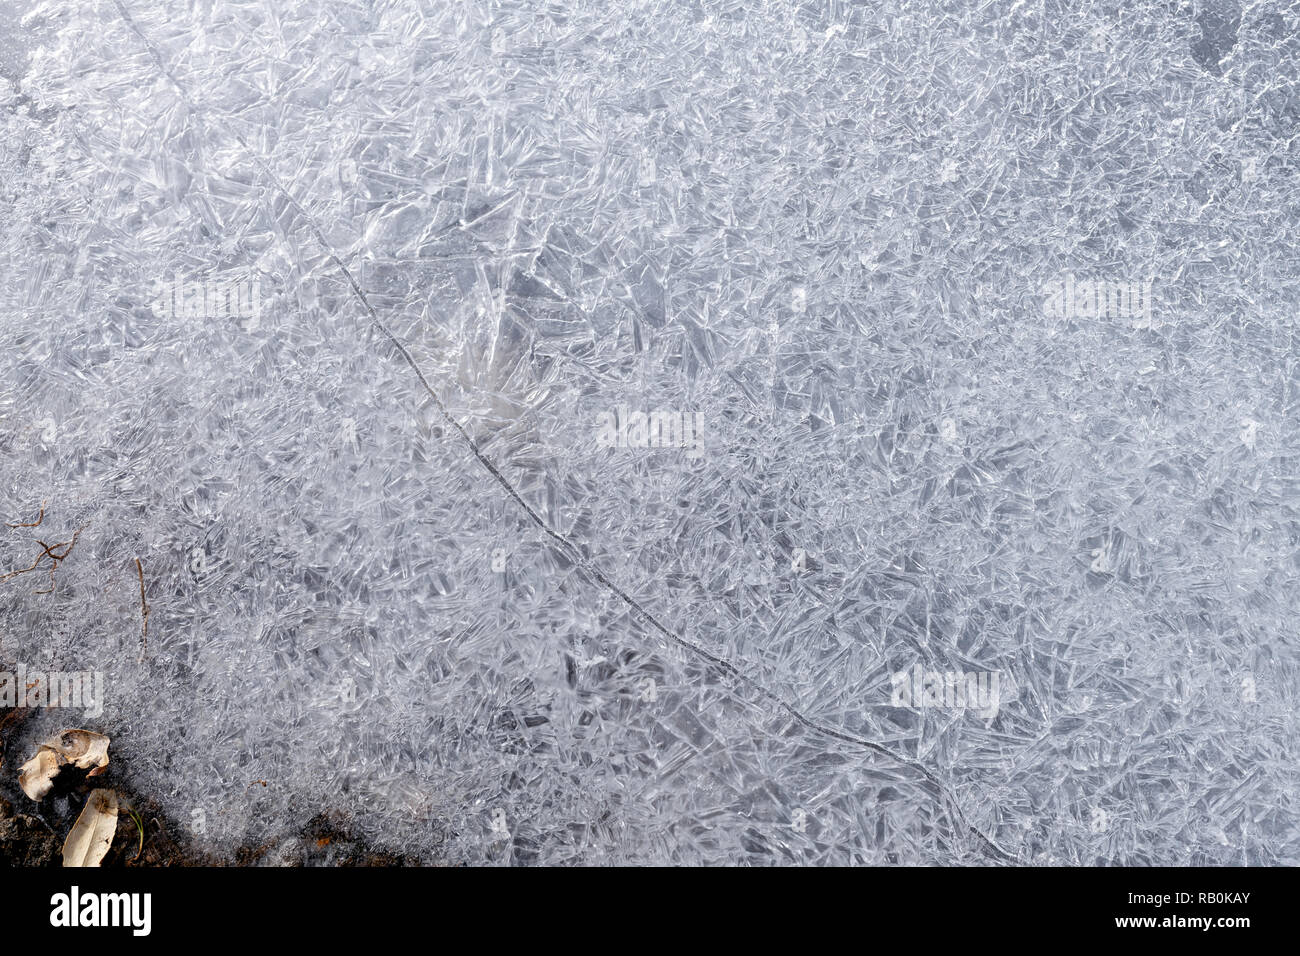 A crack runs through ice crystals in the Little Truckee River, California, USA Stock Photo